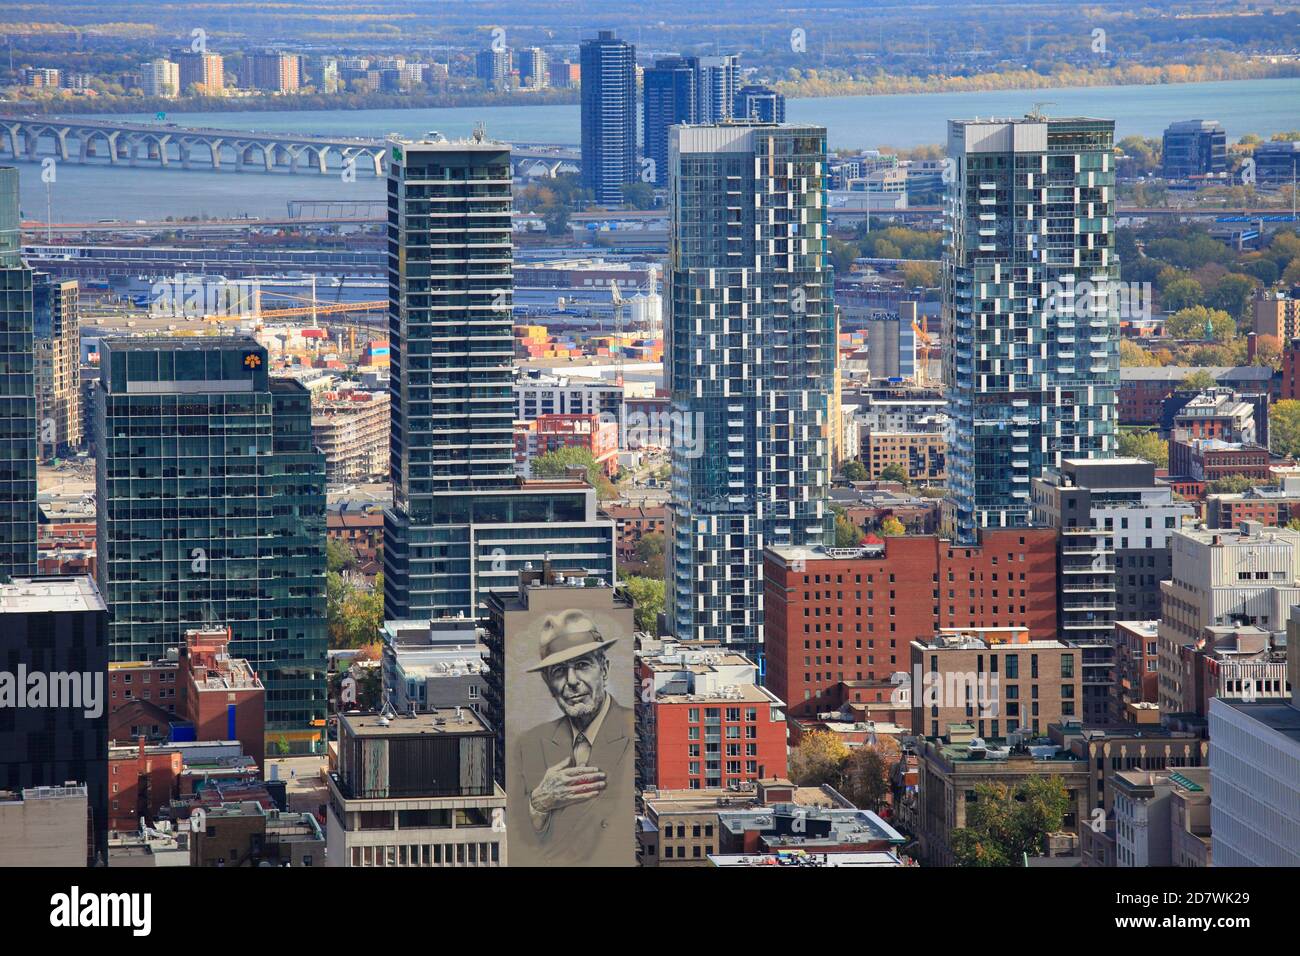 Canada, Quebec, Montreal, skyline, apartment buildings, condominiums, Leonard Cohen image, Stock Photo